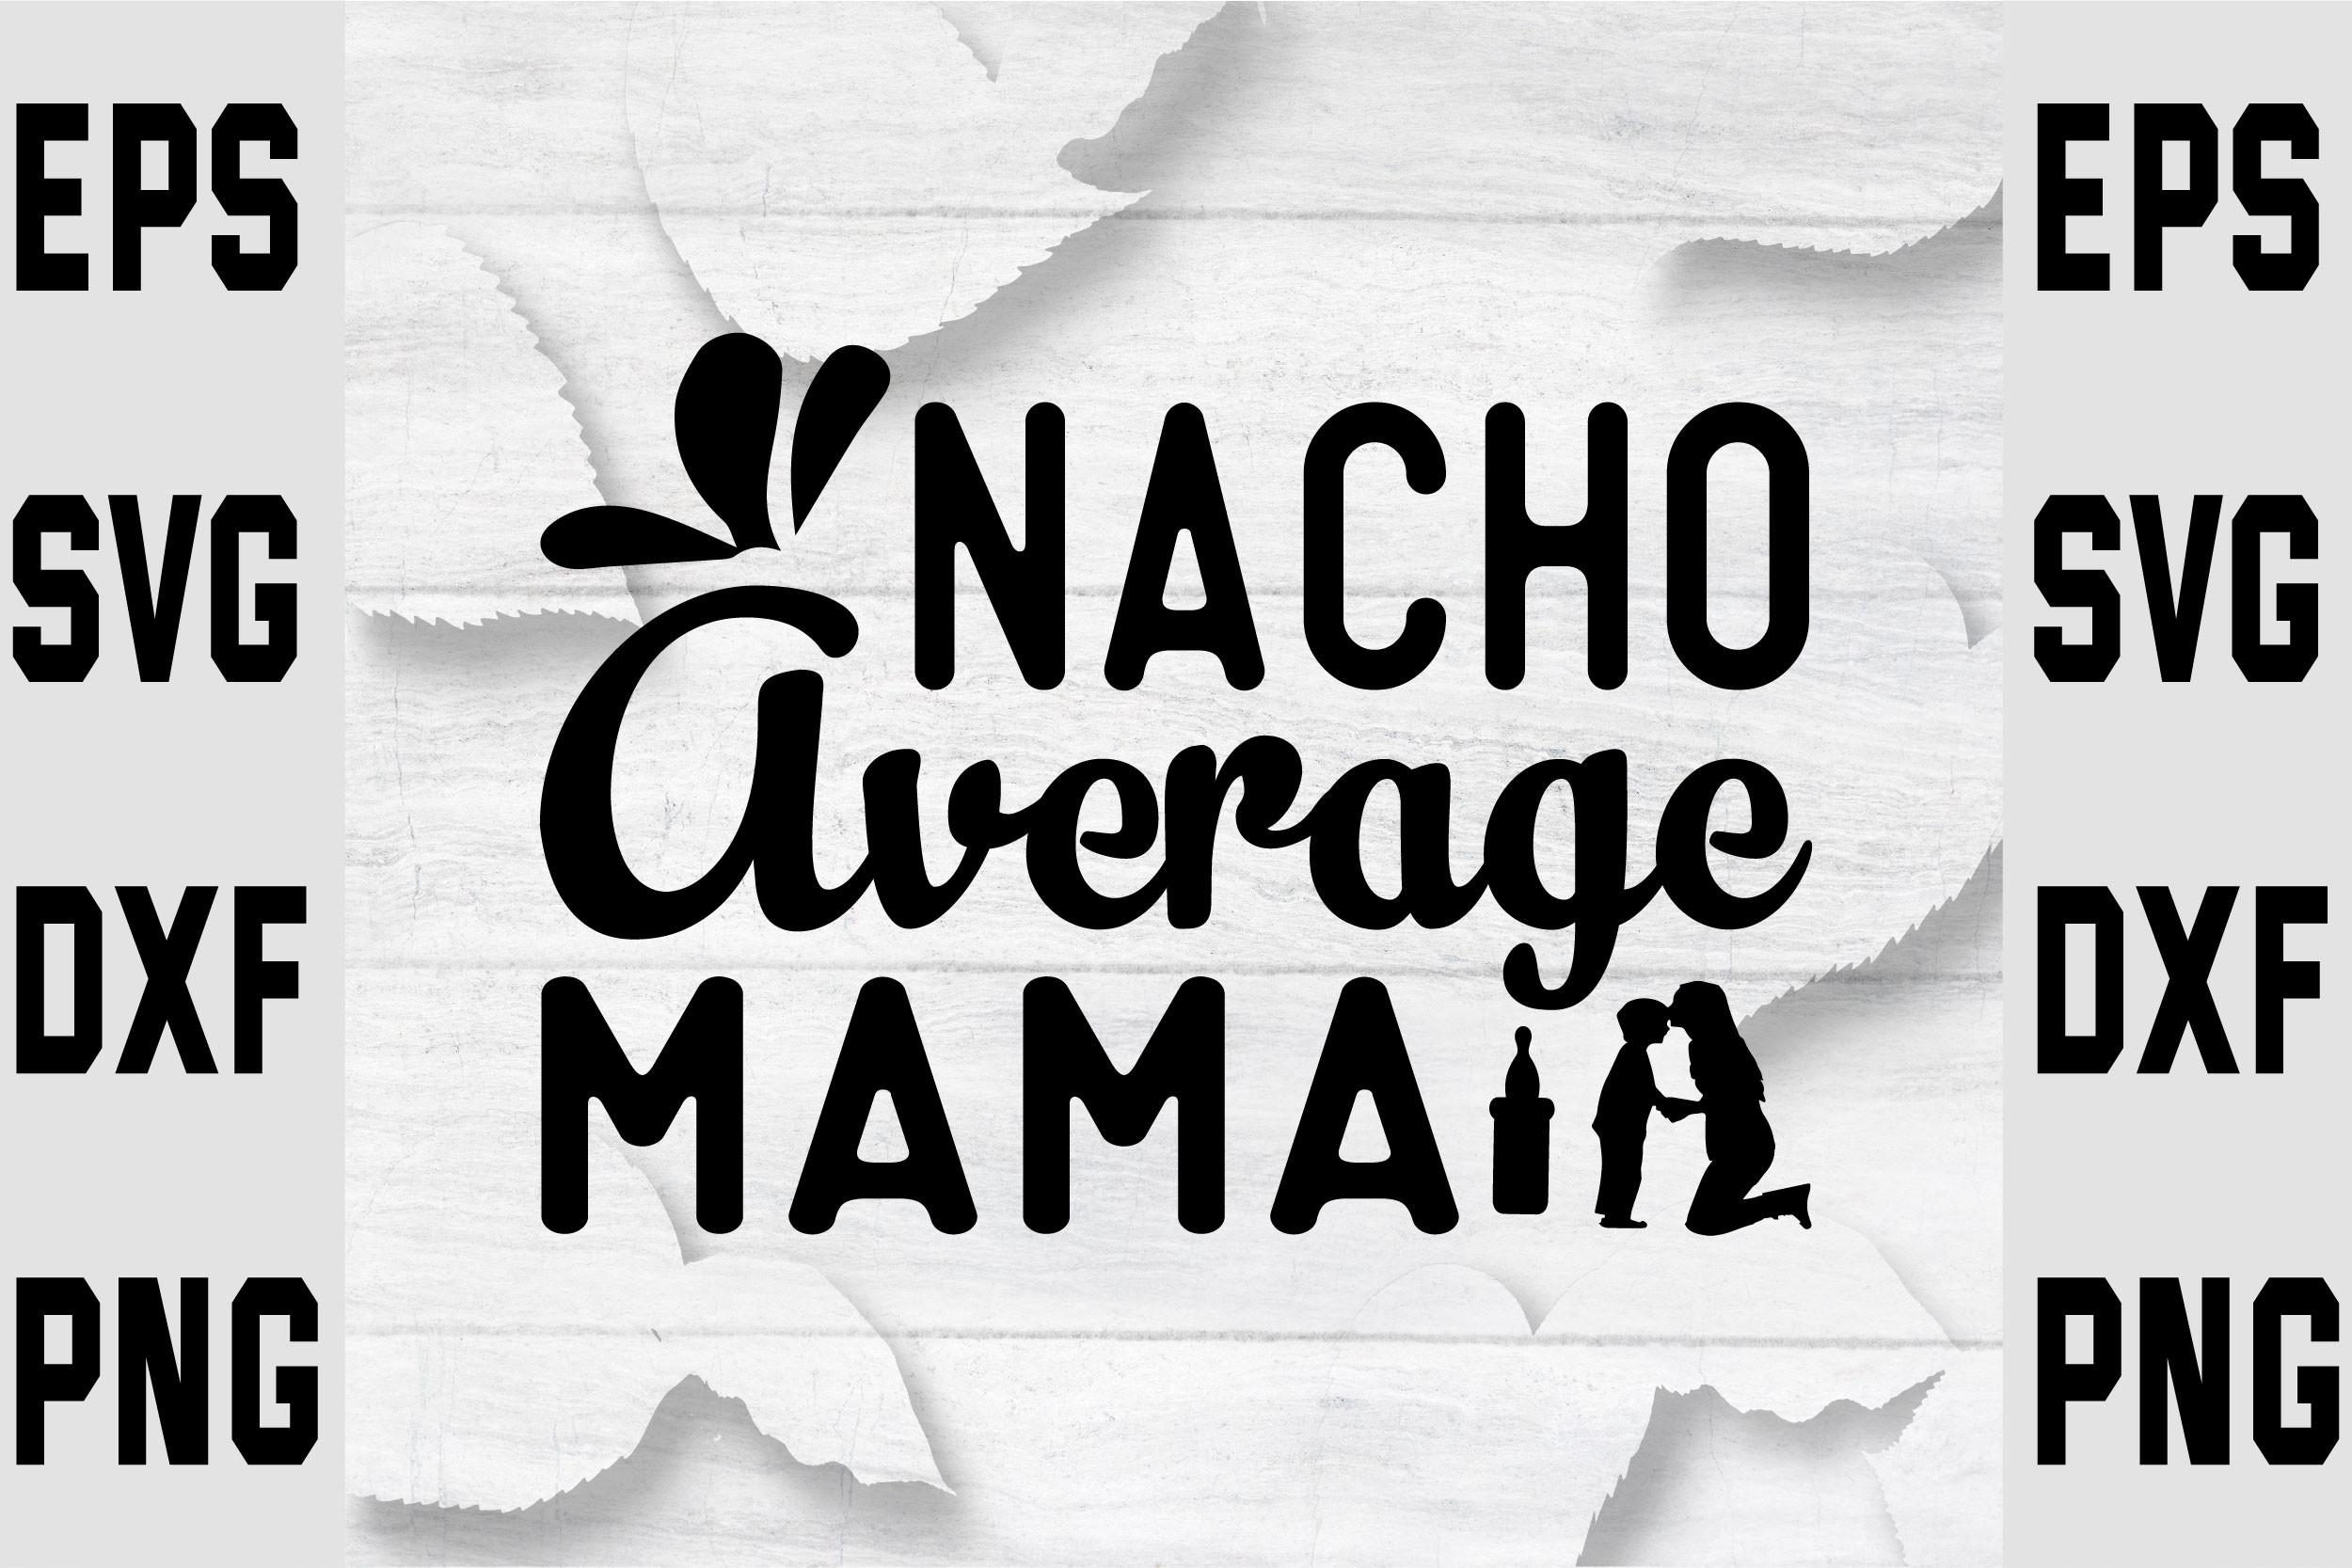 Nacho Average Mama